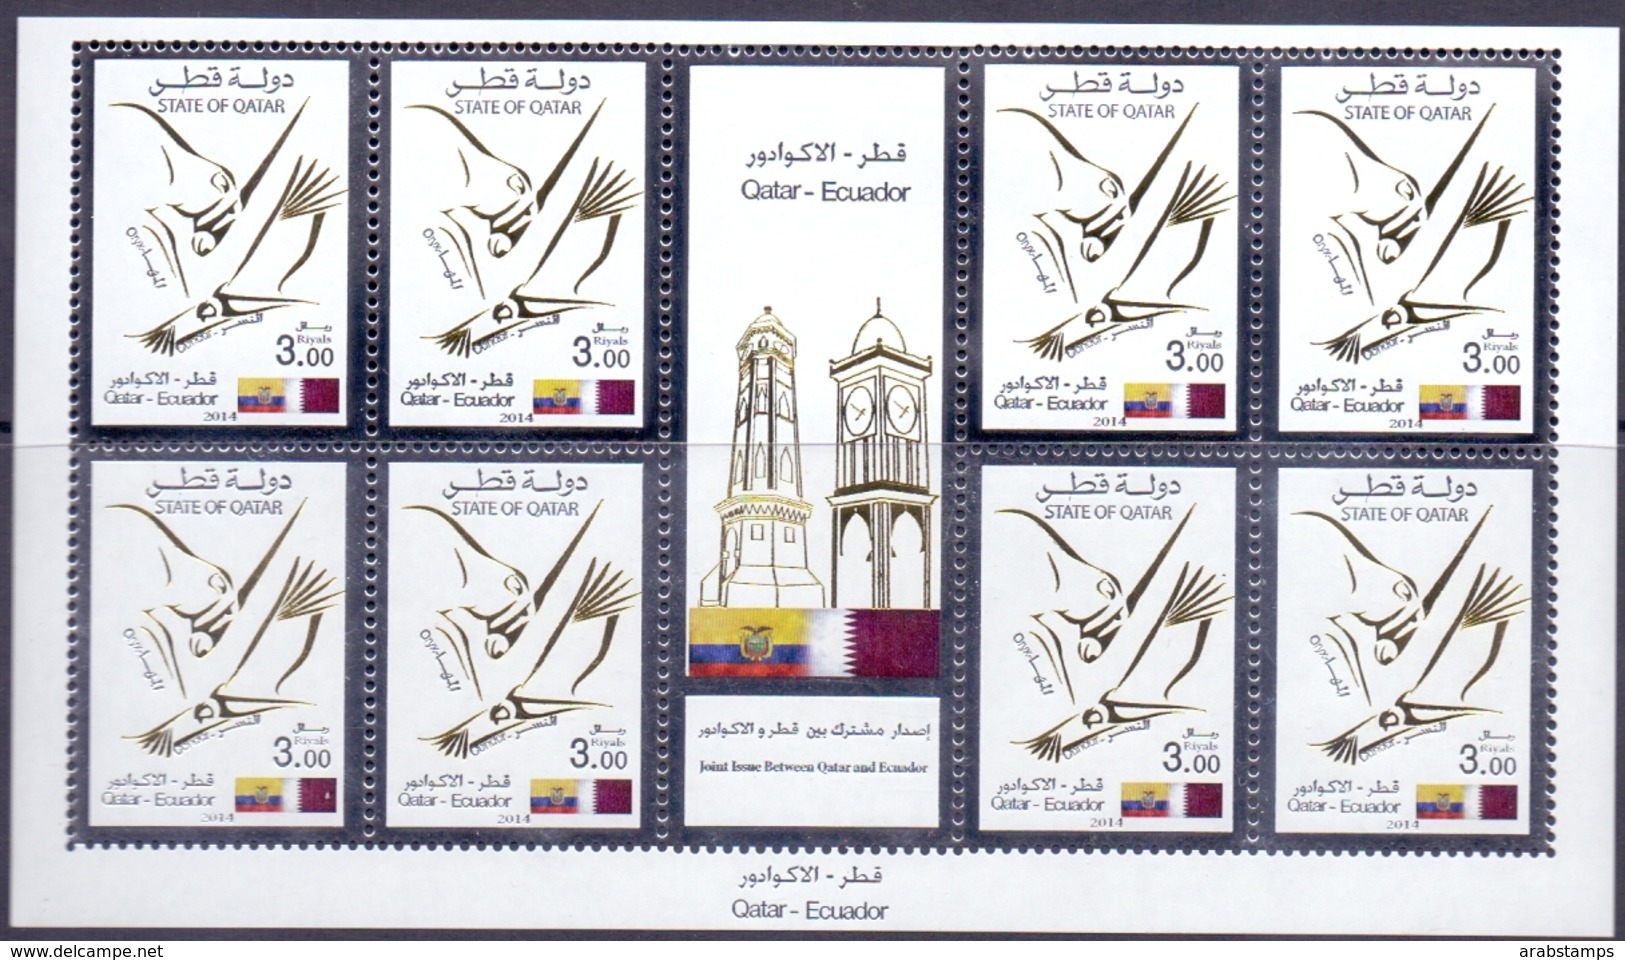 2014 QATAR Joint Issue Between Qatar And Ecuador Full Sheet 8 Values MNH - Qatar